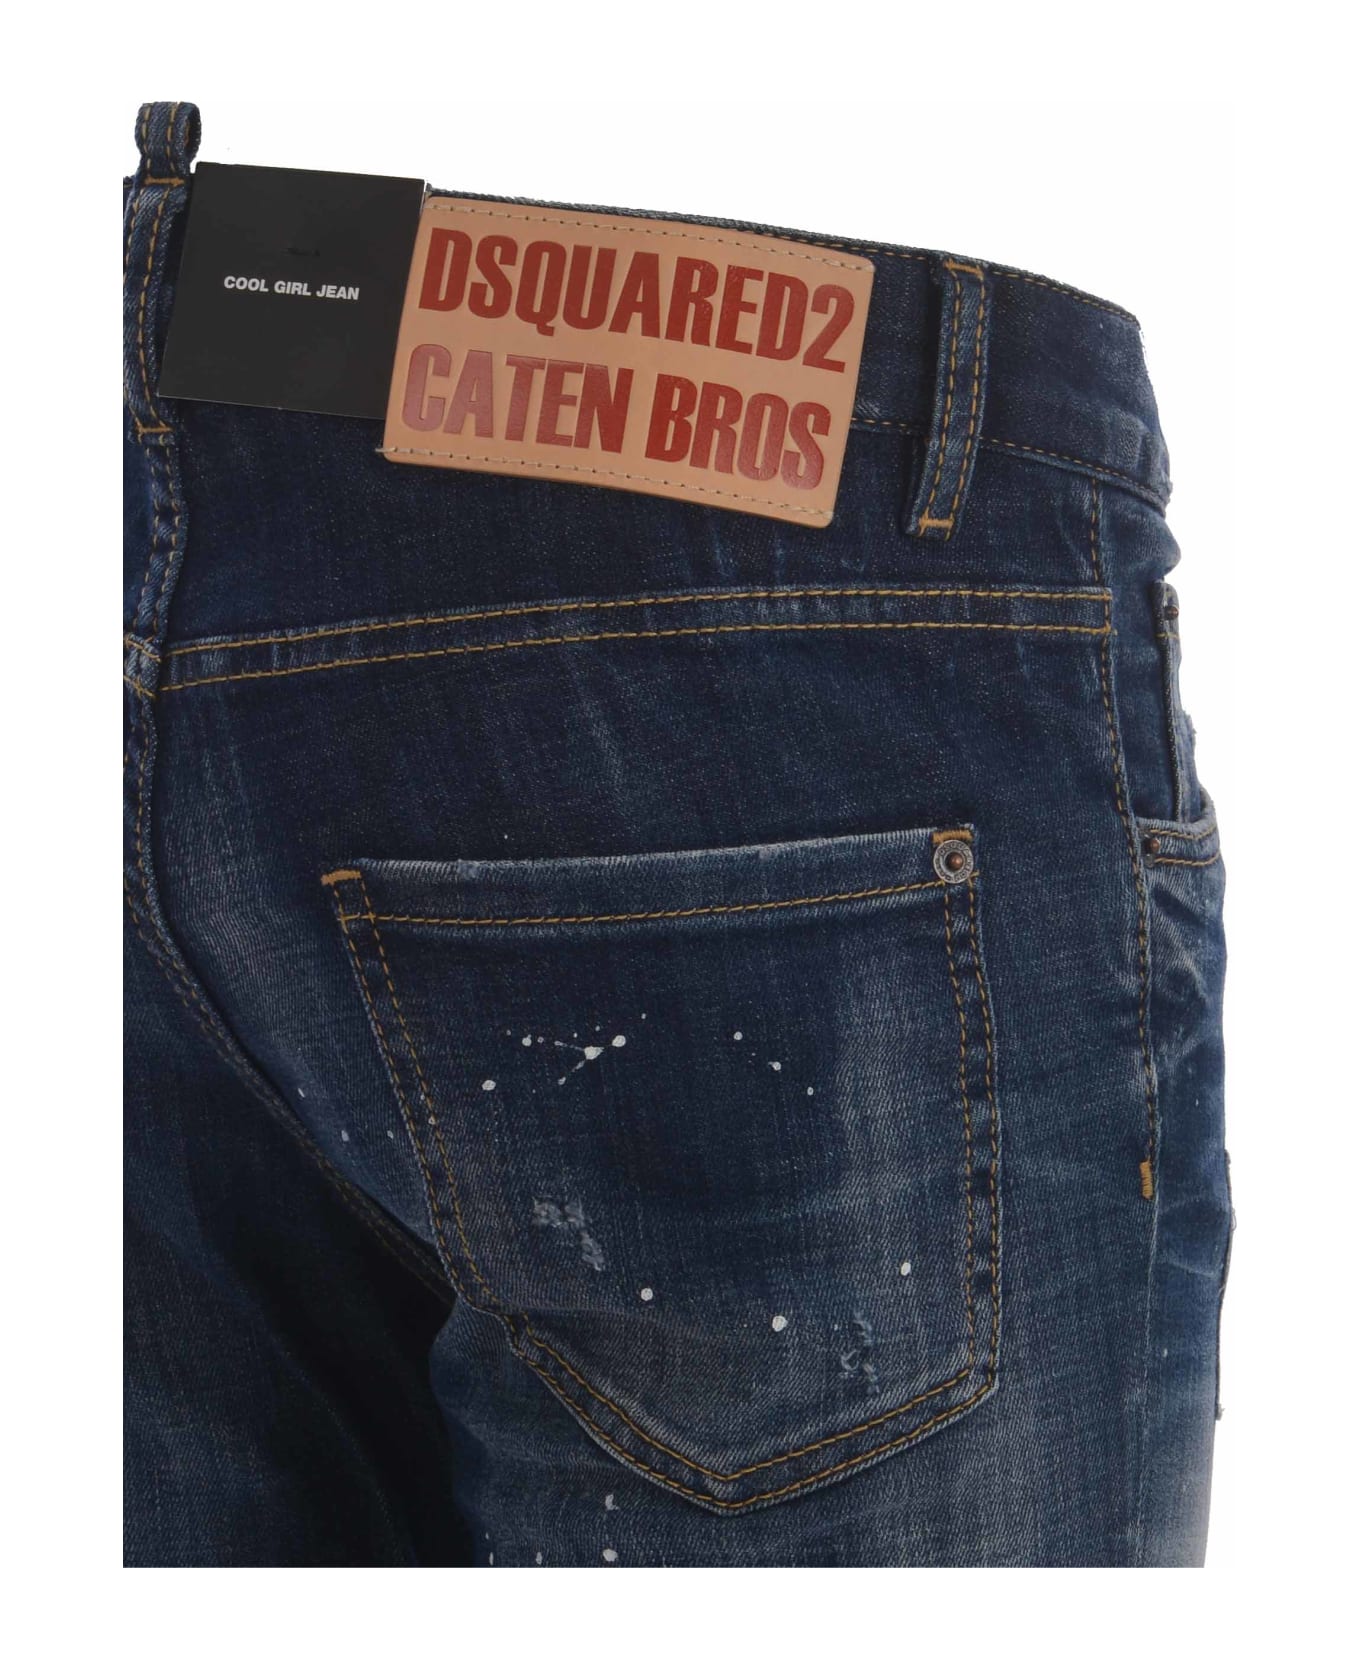 Dsquared2 Jeans Dsquared2 'cool Girl' Made Of Denim - Denim blu デニム